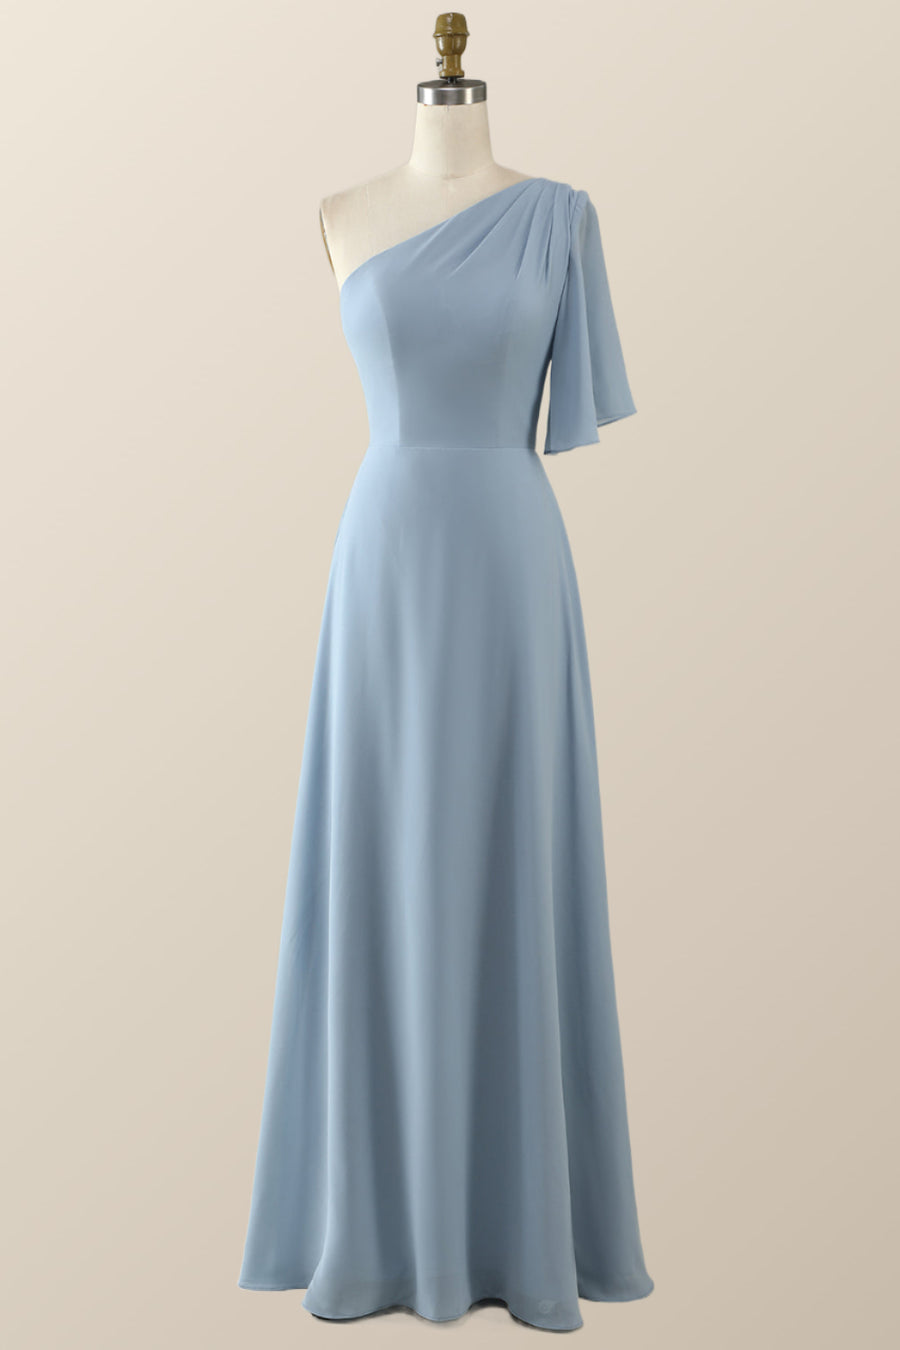 One Shoulder Misty Blue Chiffon Long Bridesmaid Dress